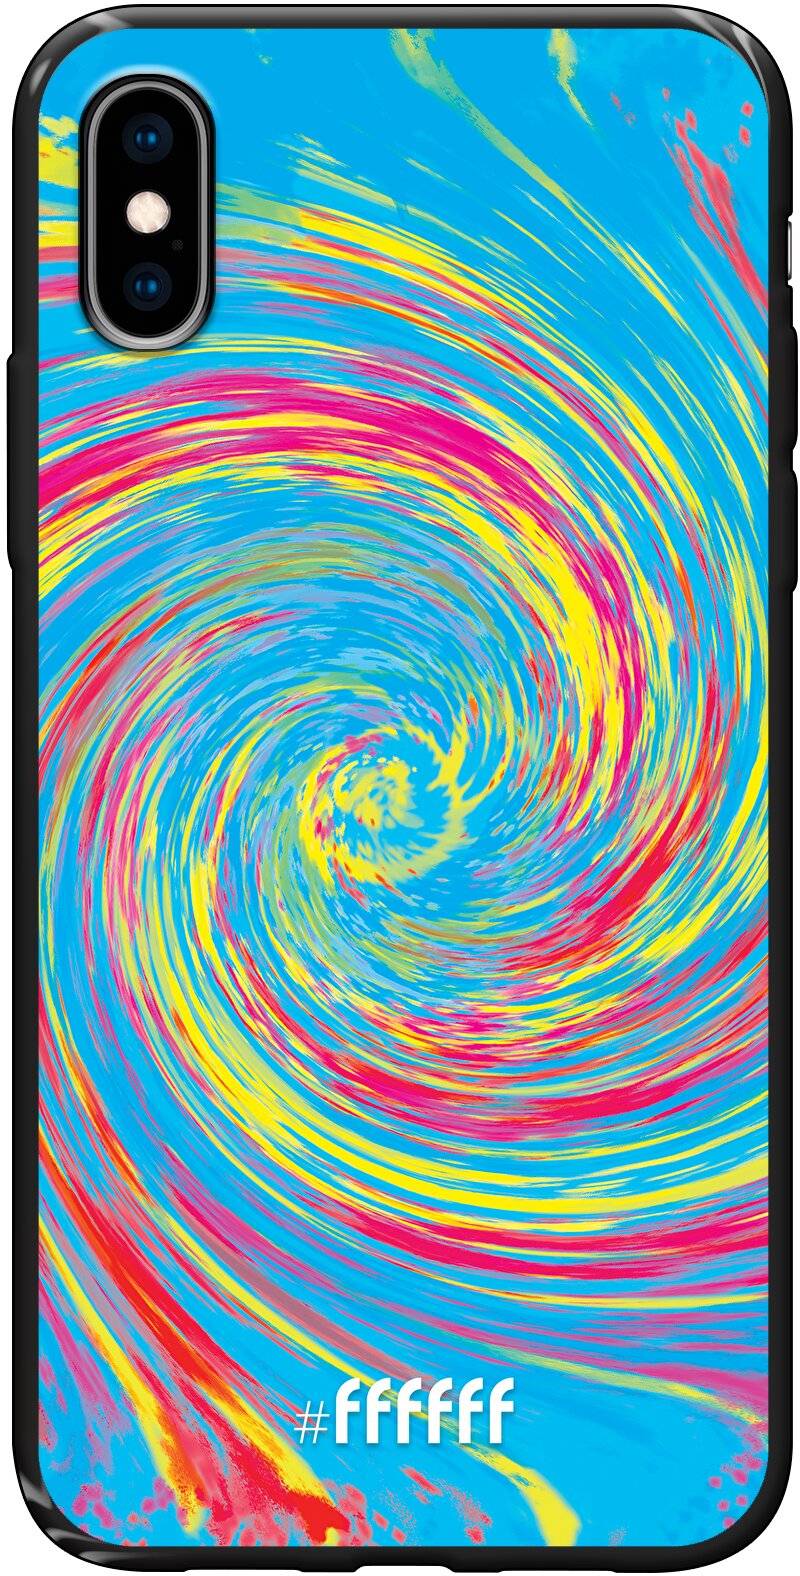 Swirl Tie Dye iPhone X